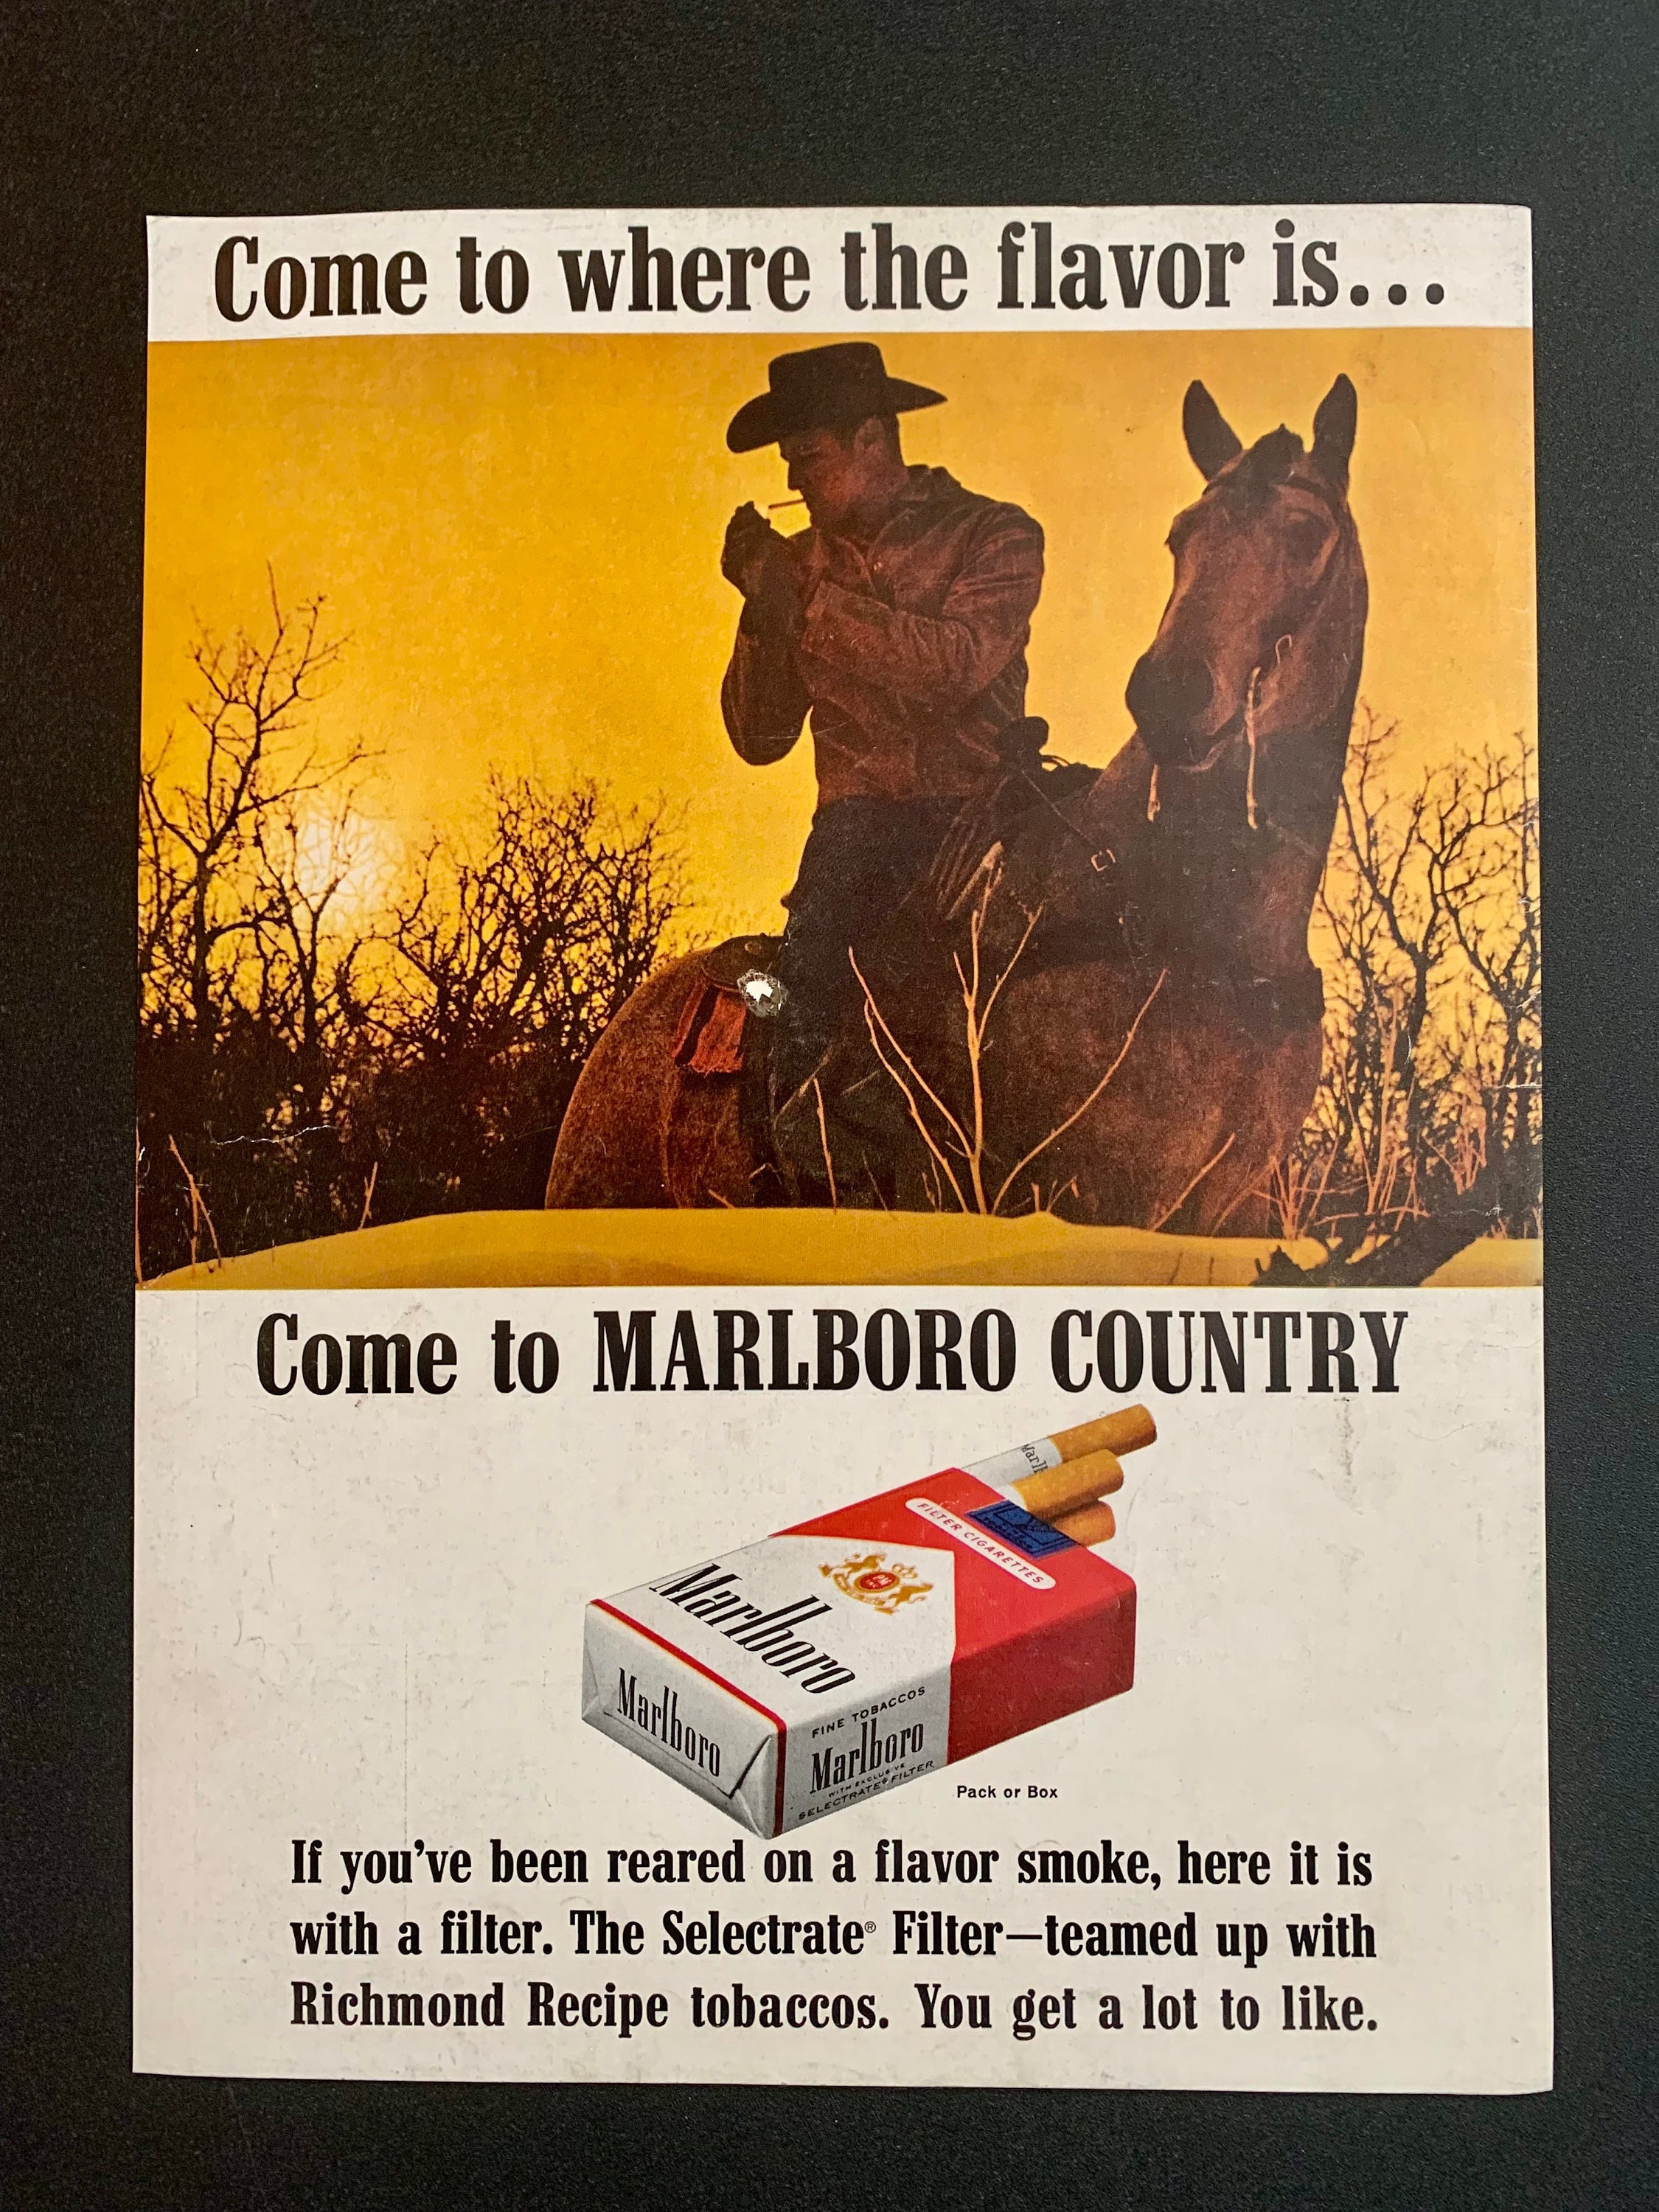 Marlboro Red Box Cigarettes - Cheers On Demand